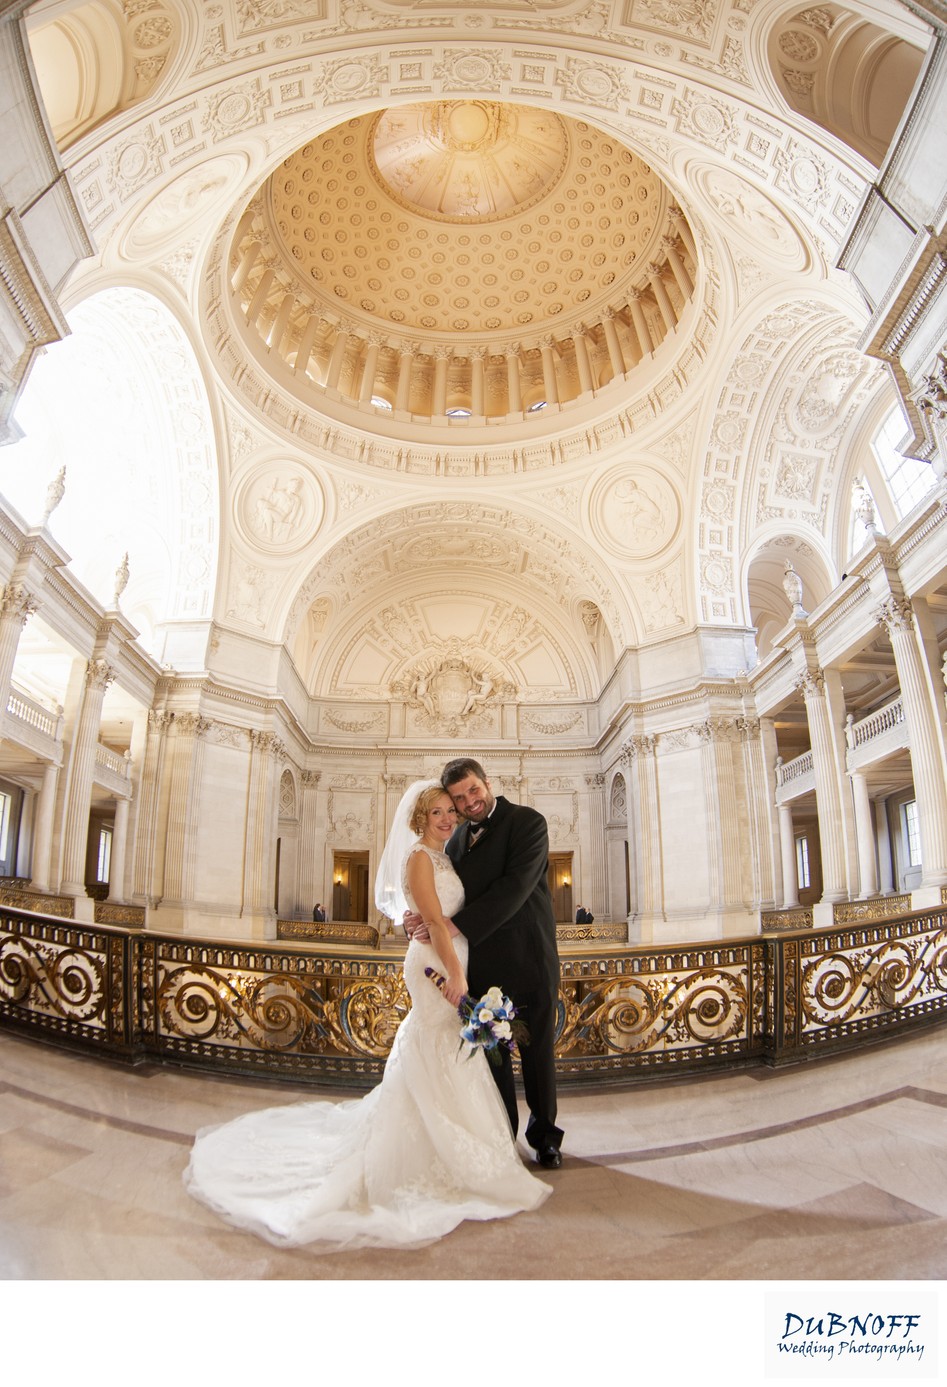 San Francisco city hall wide angle wedding photography of the Rotunda